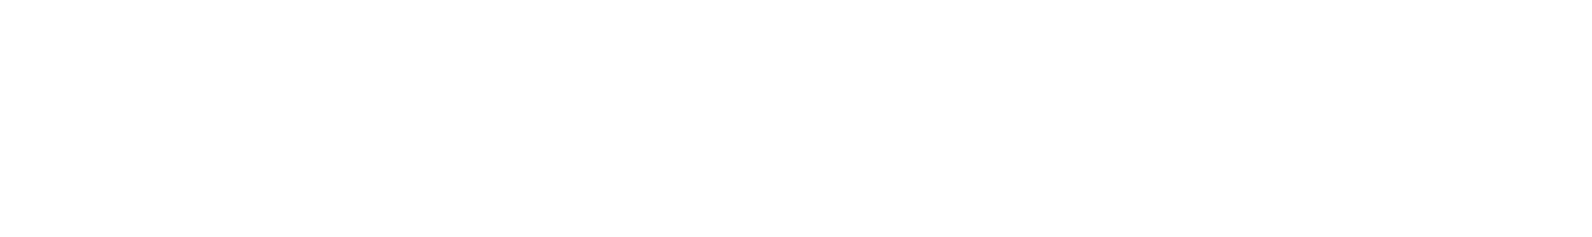 Winmark logo large for dark backgrounds (transparent PNG)